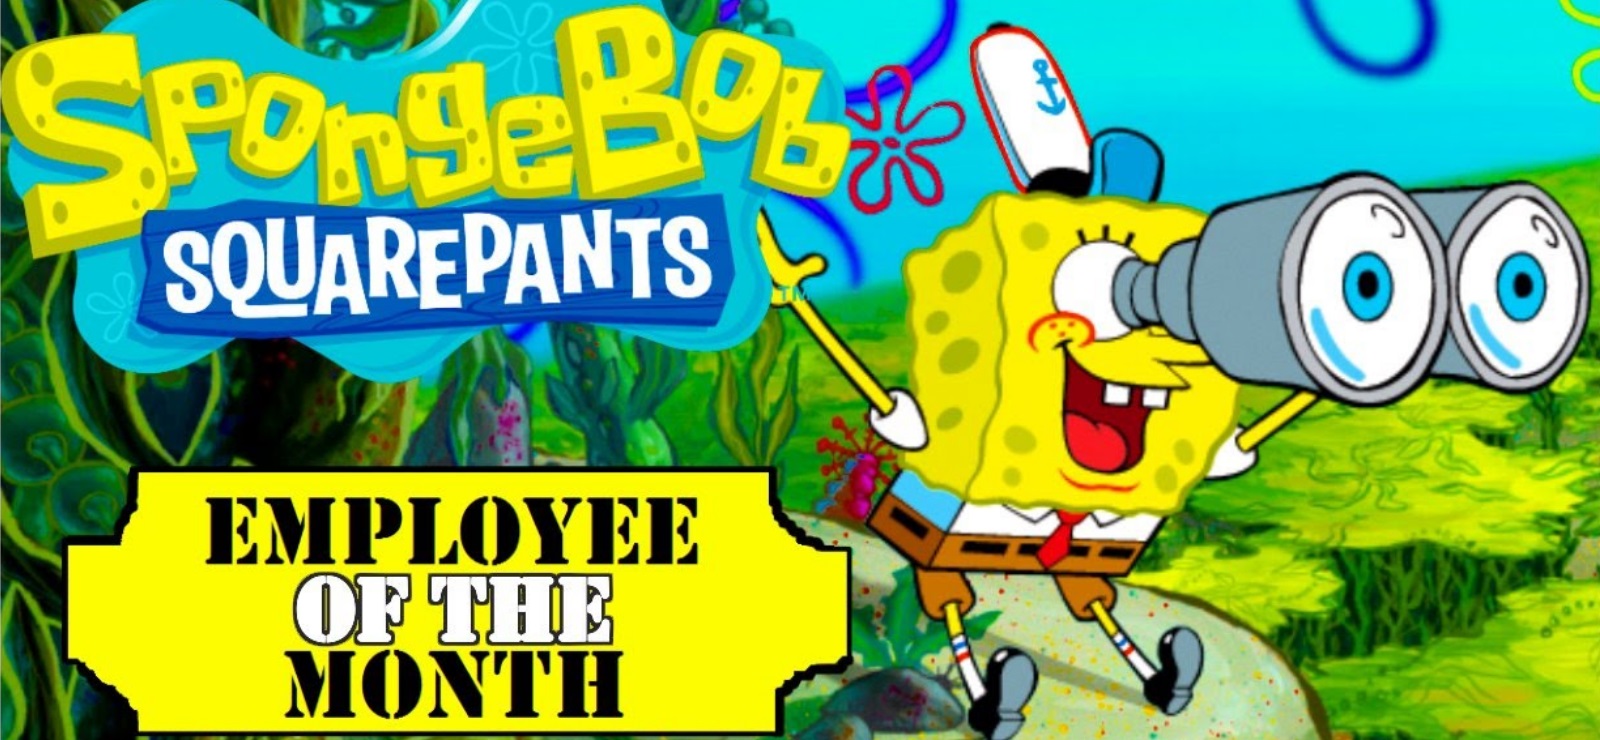 spongebob squarepants employee of the month